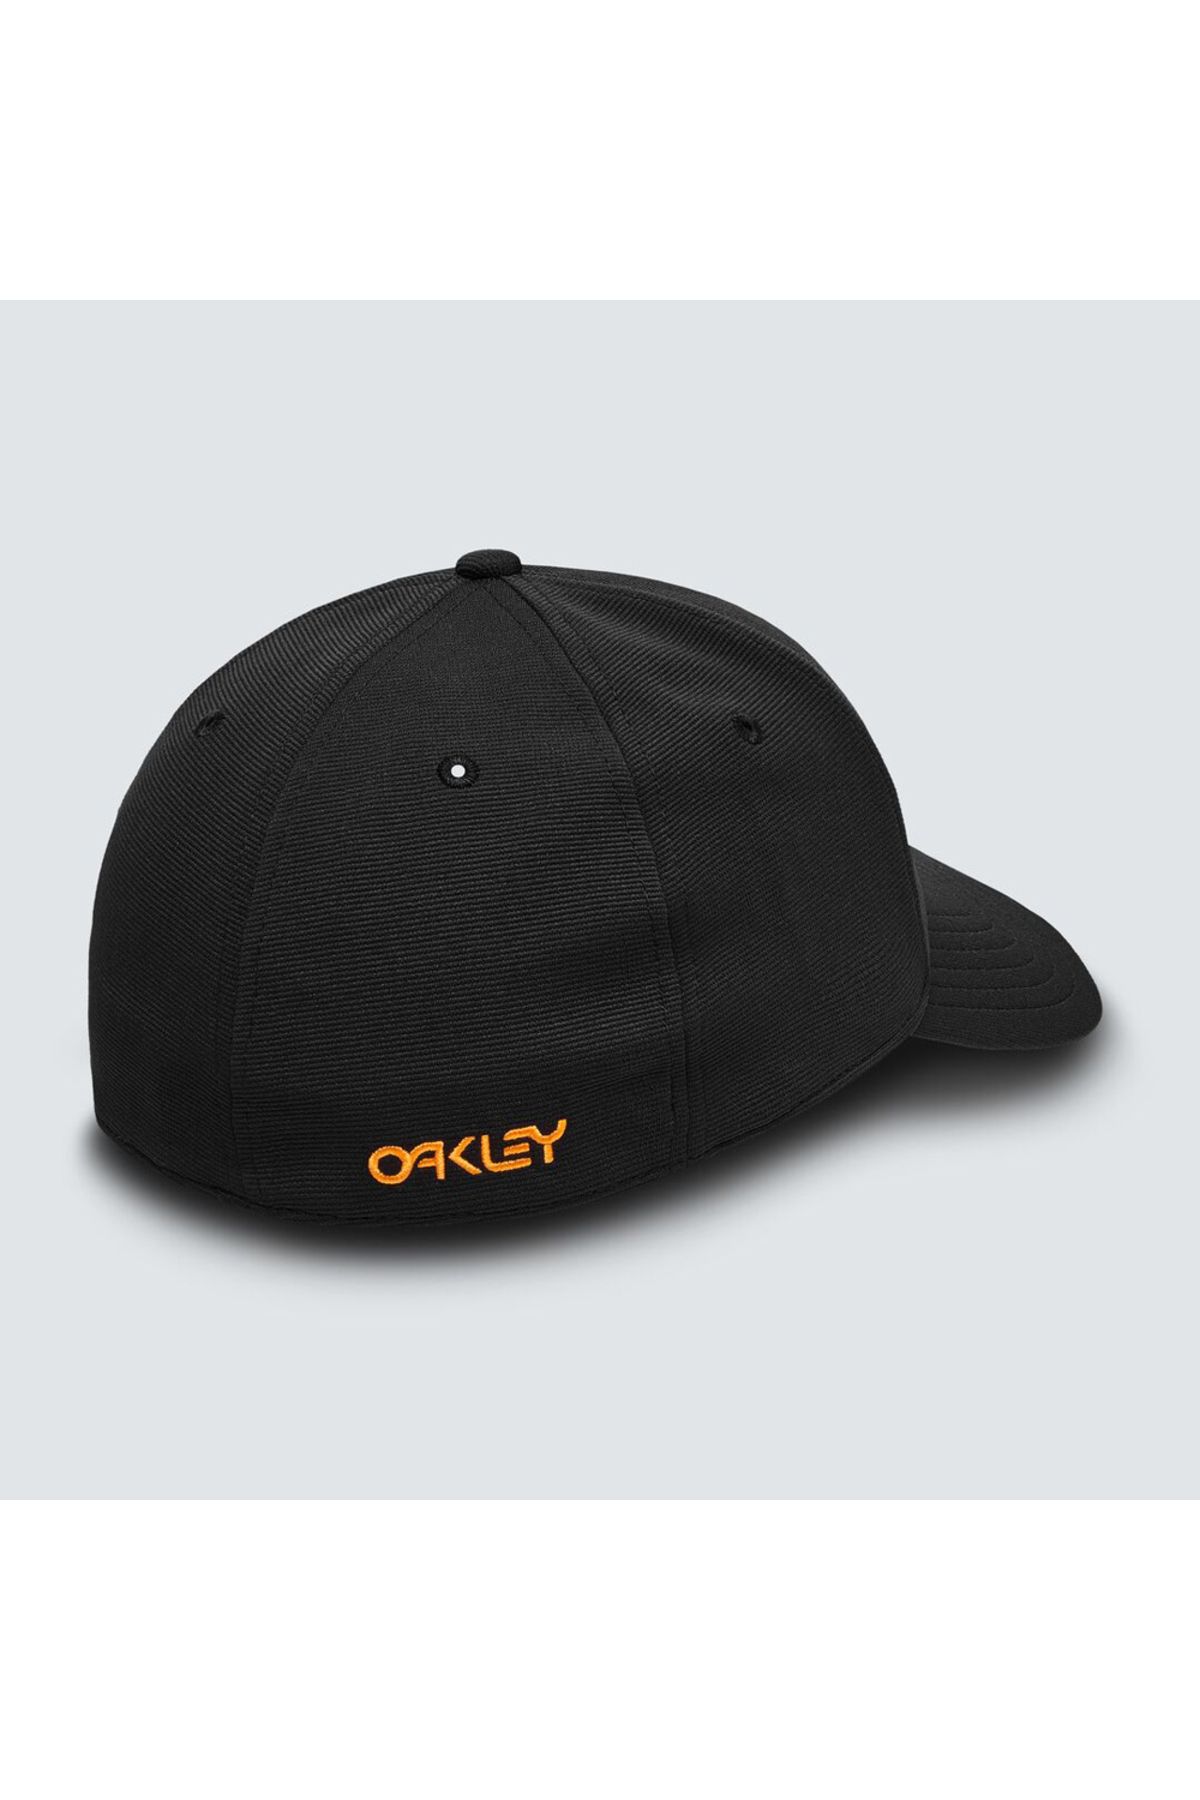 Oakley 6 Panel Stretch Hat Embossed Erkek Şapka